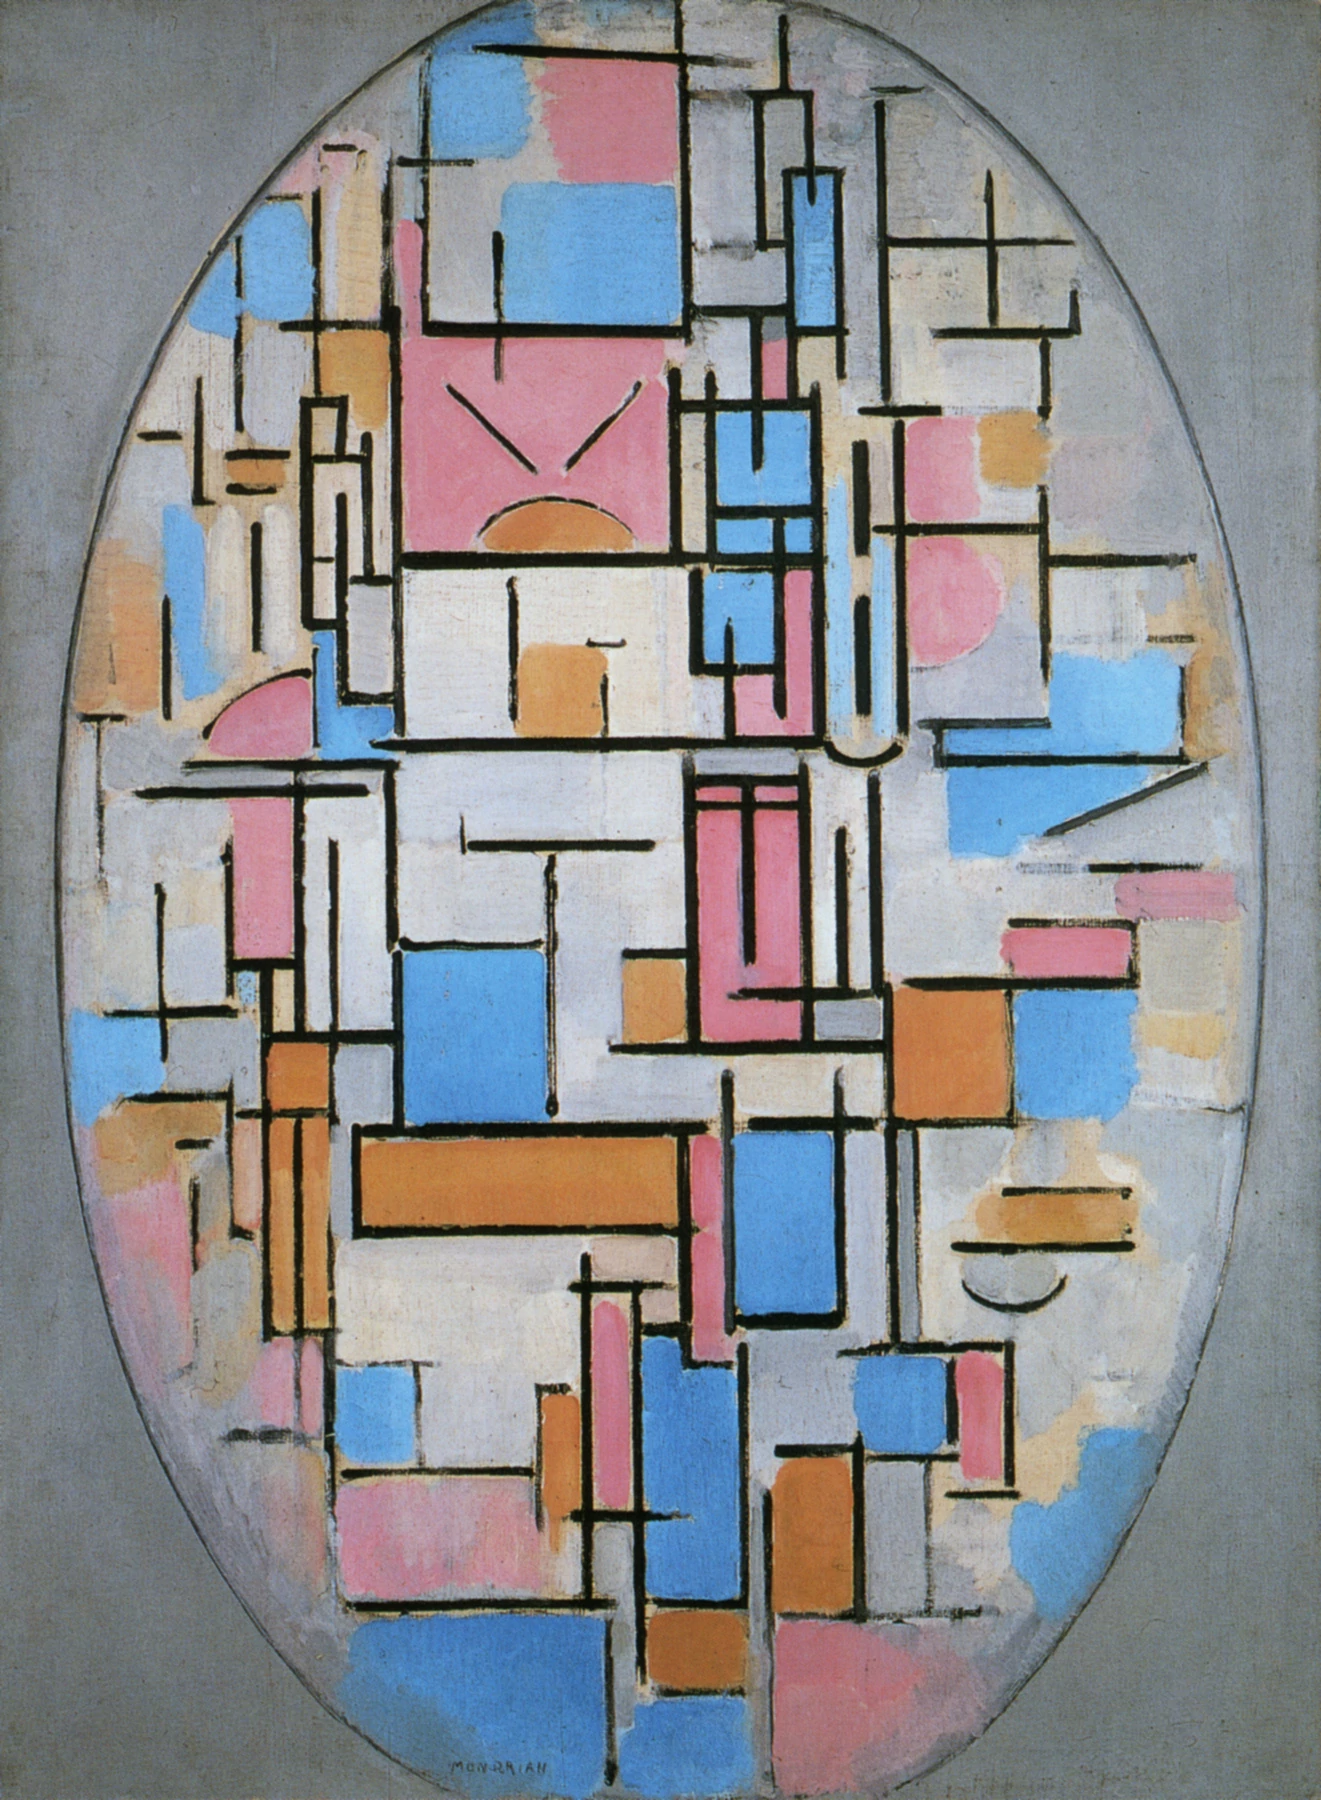 Piet Mondrian, The Artists